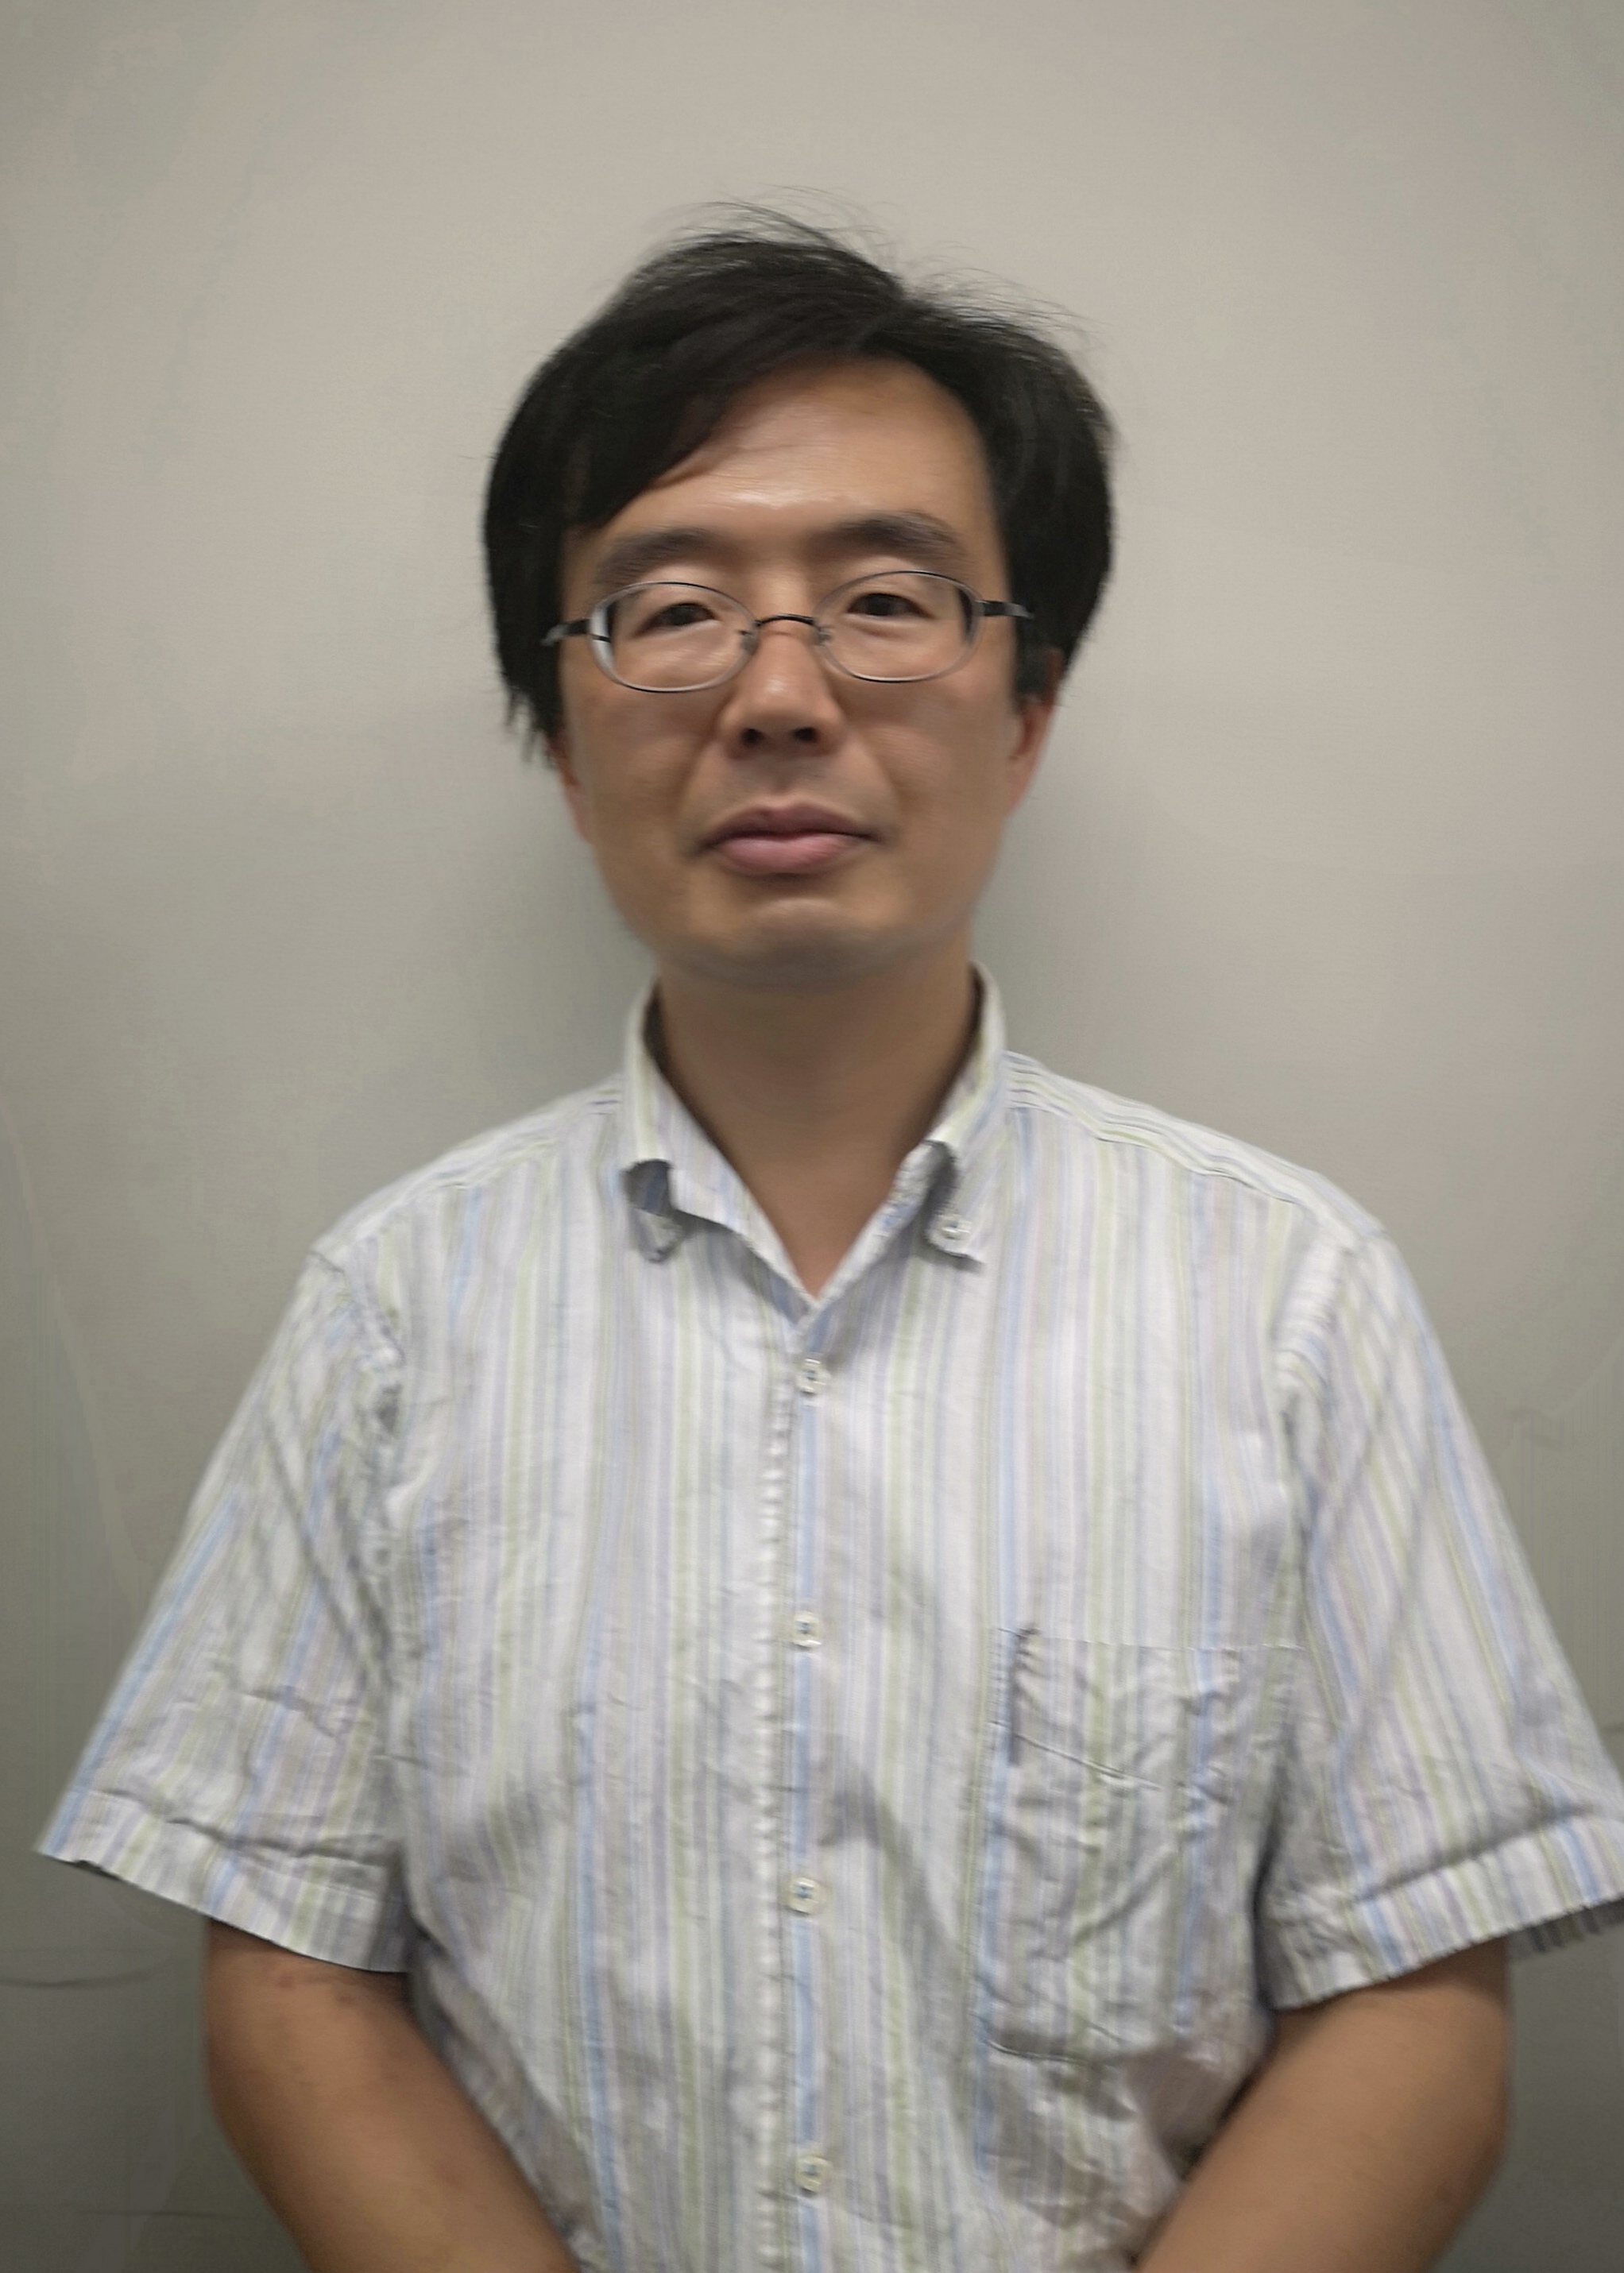 Teacher's Profile | Fujita Power System Lab